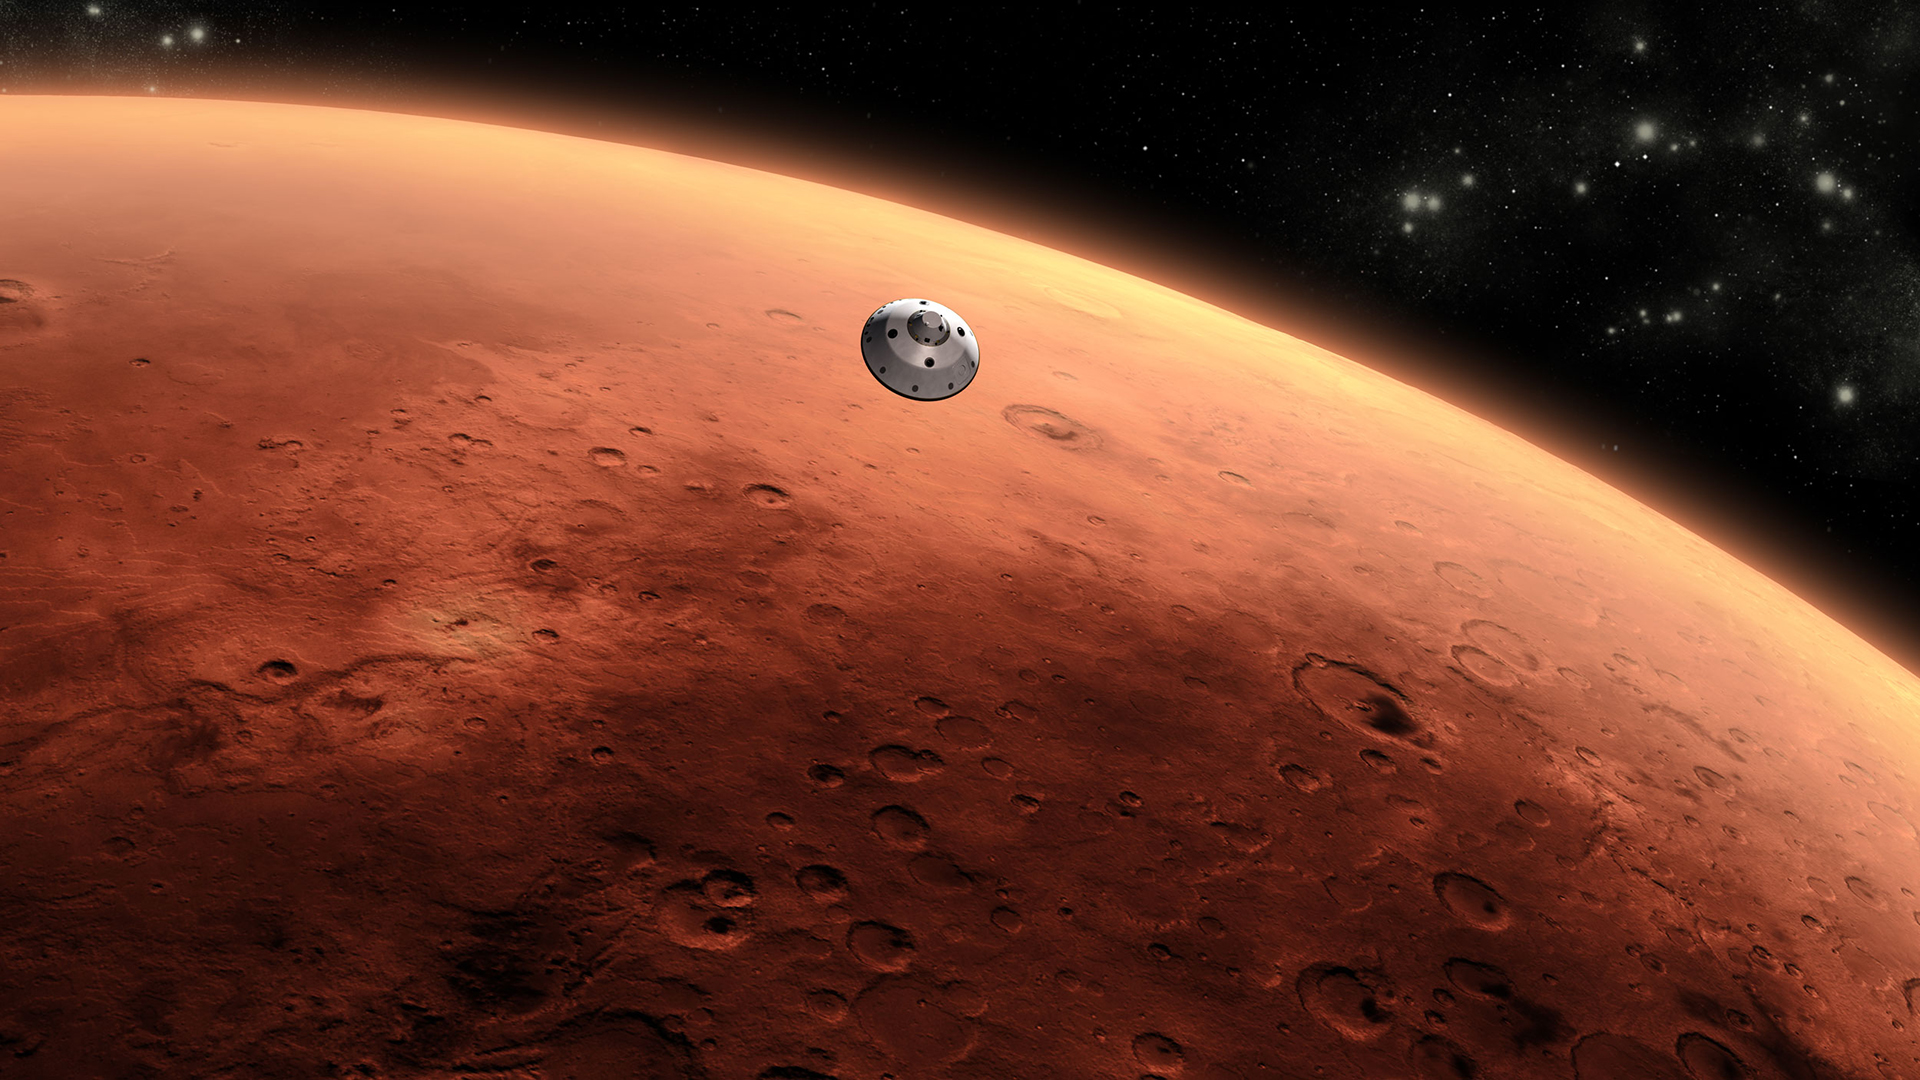 Mars Up Close, Part 1: Marc Kaufman